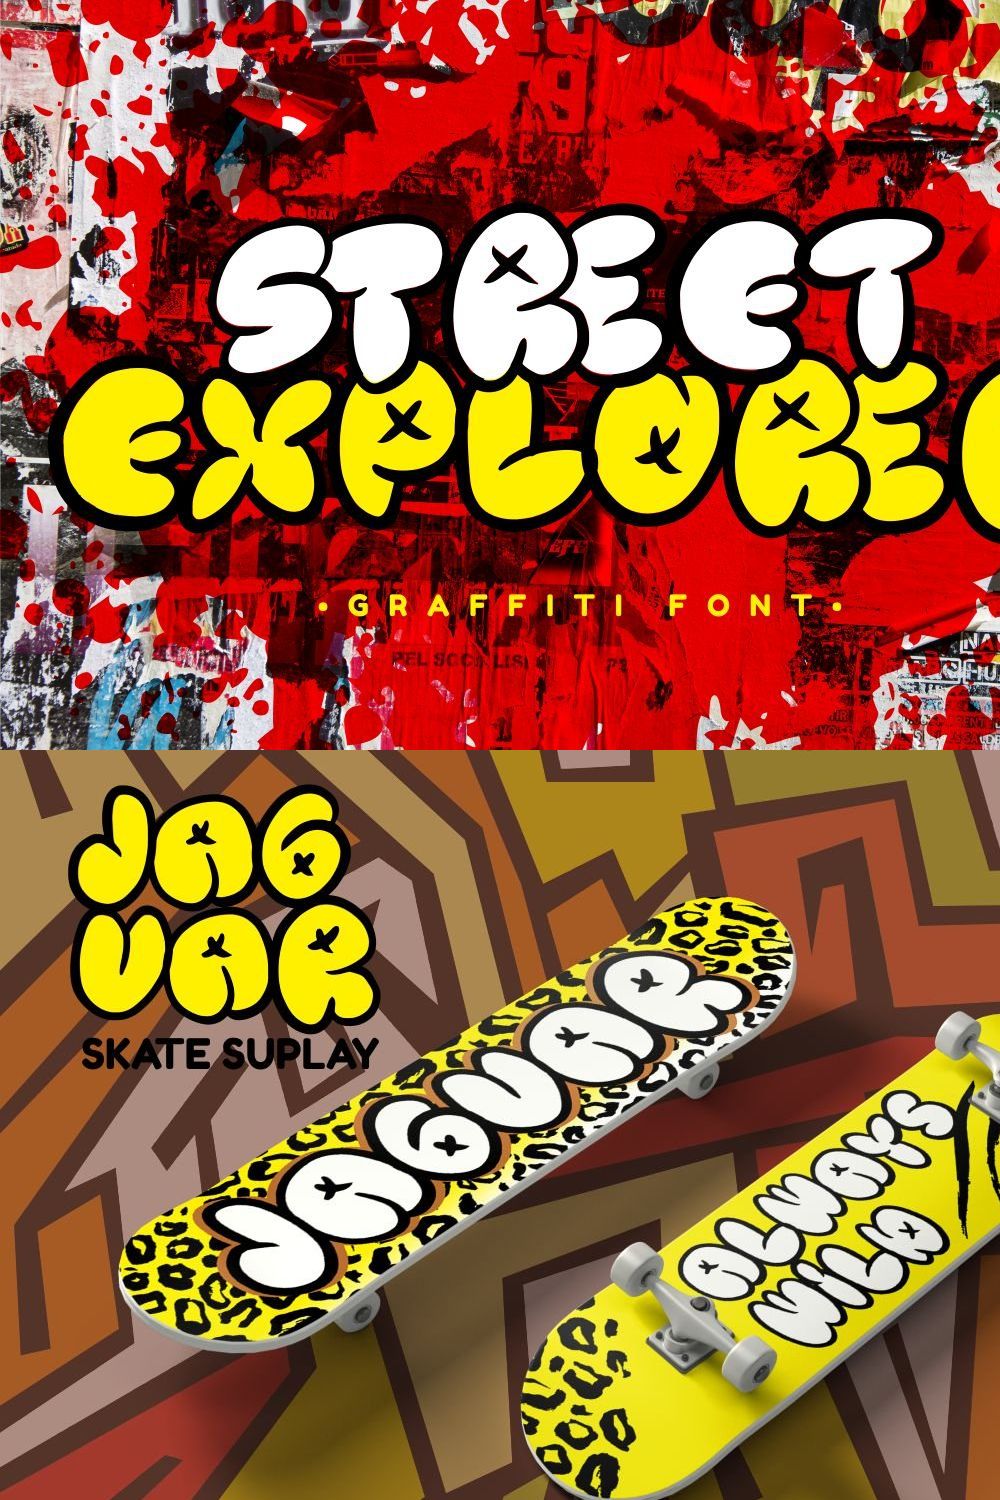 Street Explorer - Graffiti Font pinterest preview image.